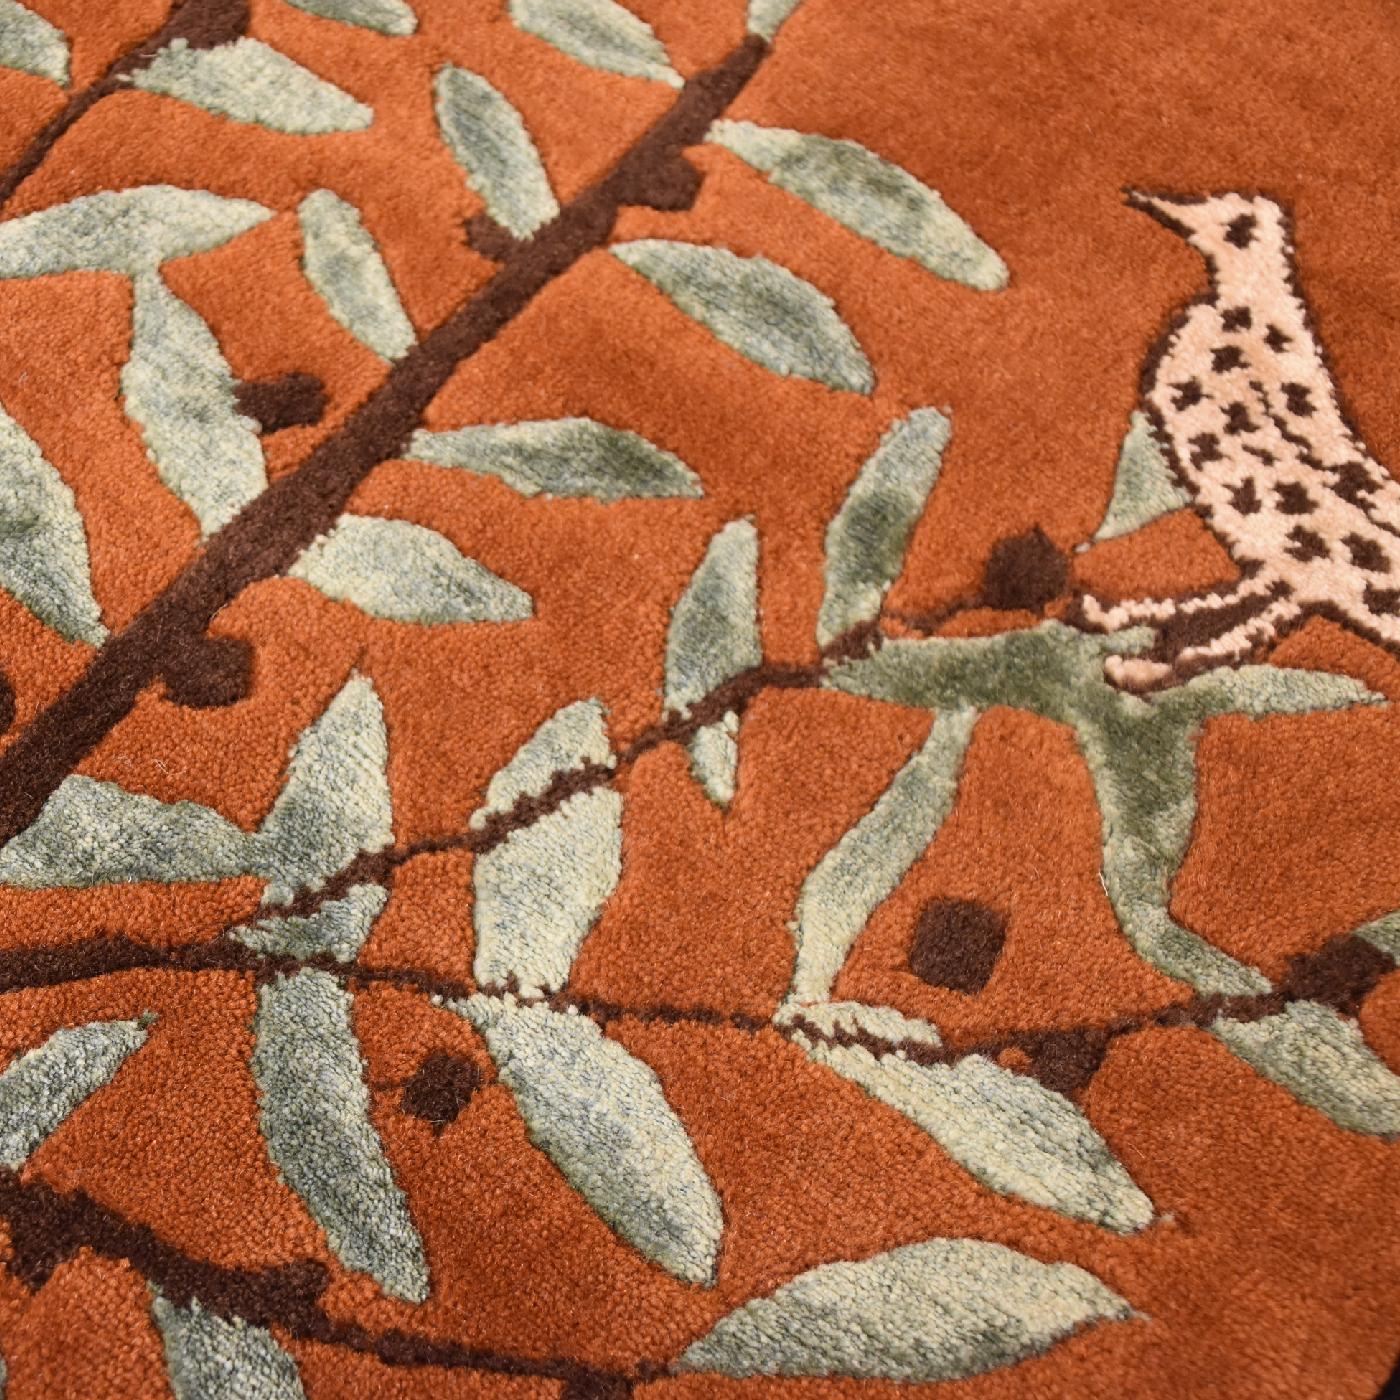 Textile Dalle Gioie Degli Etruschi N. 4 Rug by Linde Burkhardt For Sale